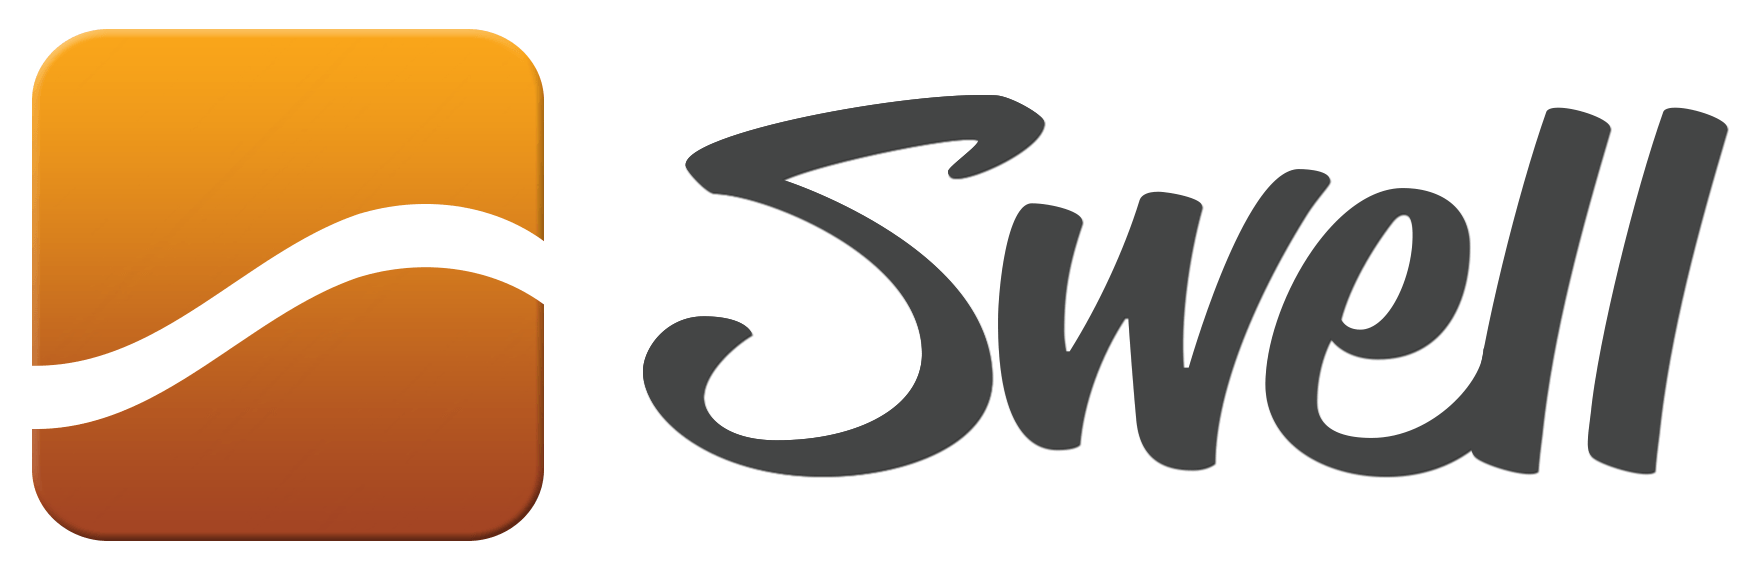 Swell Logo - Swell Logos